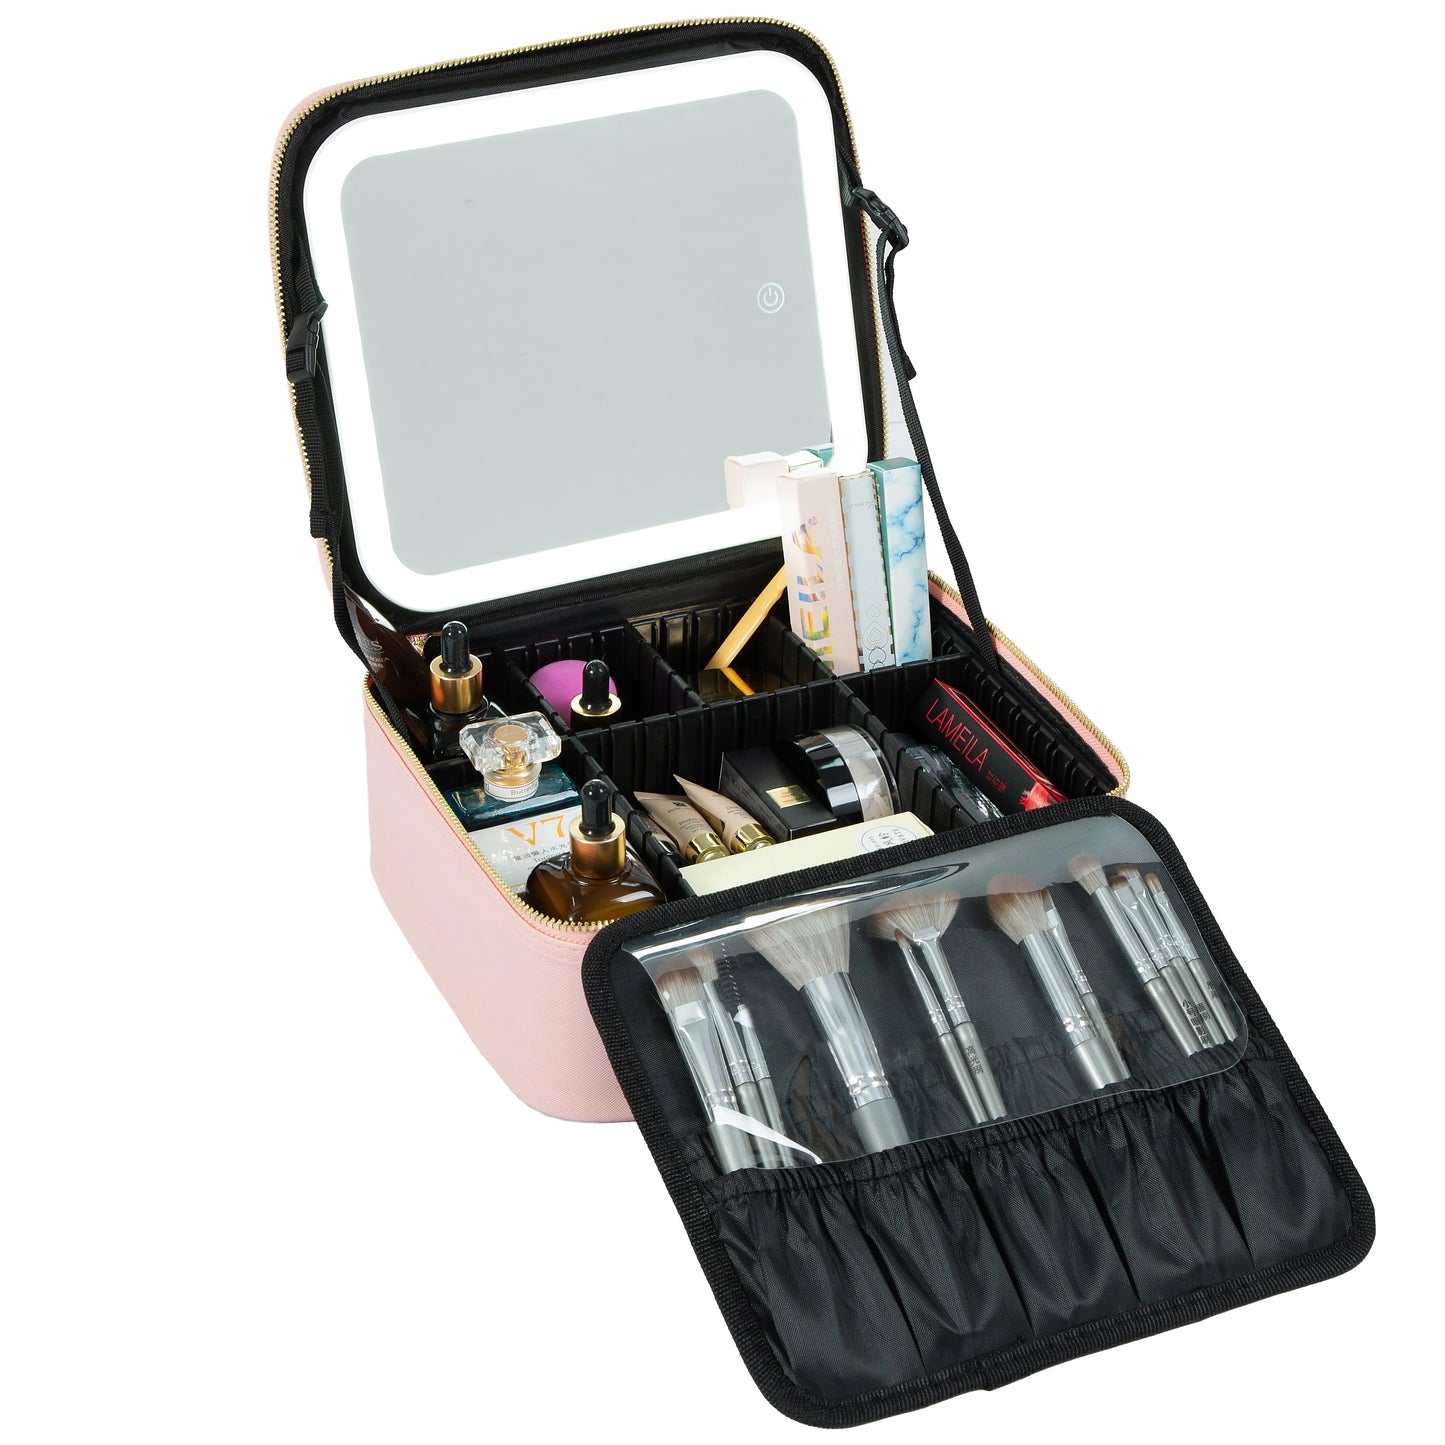 Sweet and Blush Makeup Travel Case - Adjustable Brightness LED Mirror and Adjustable Dividers